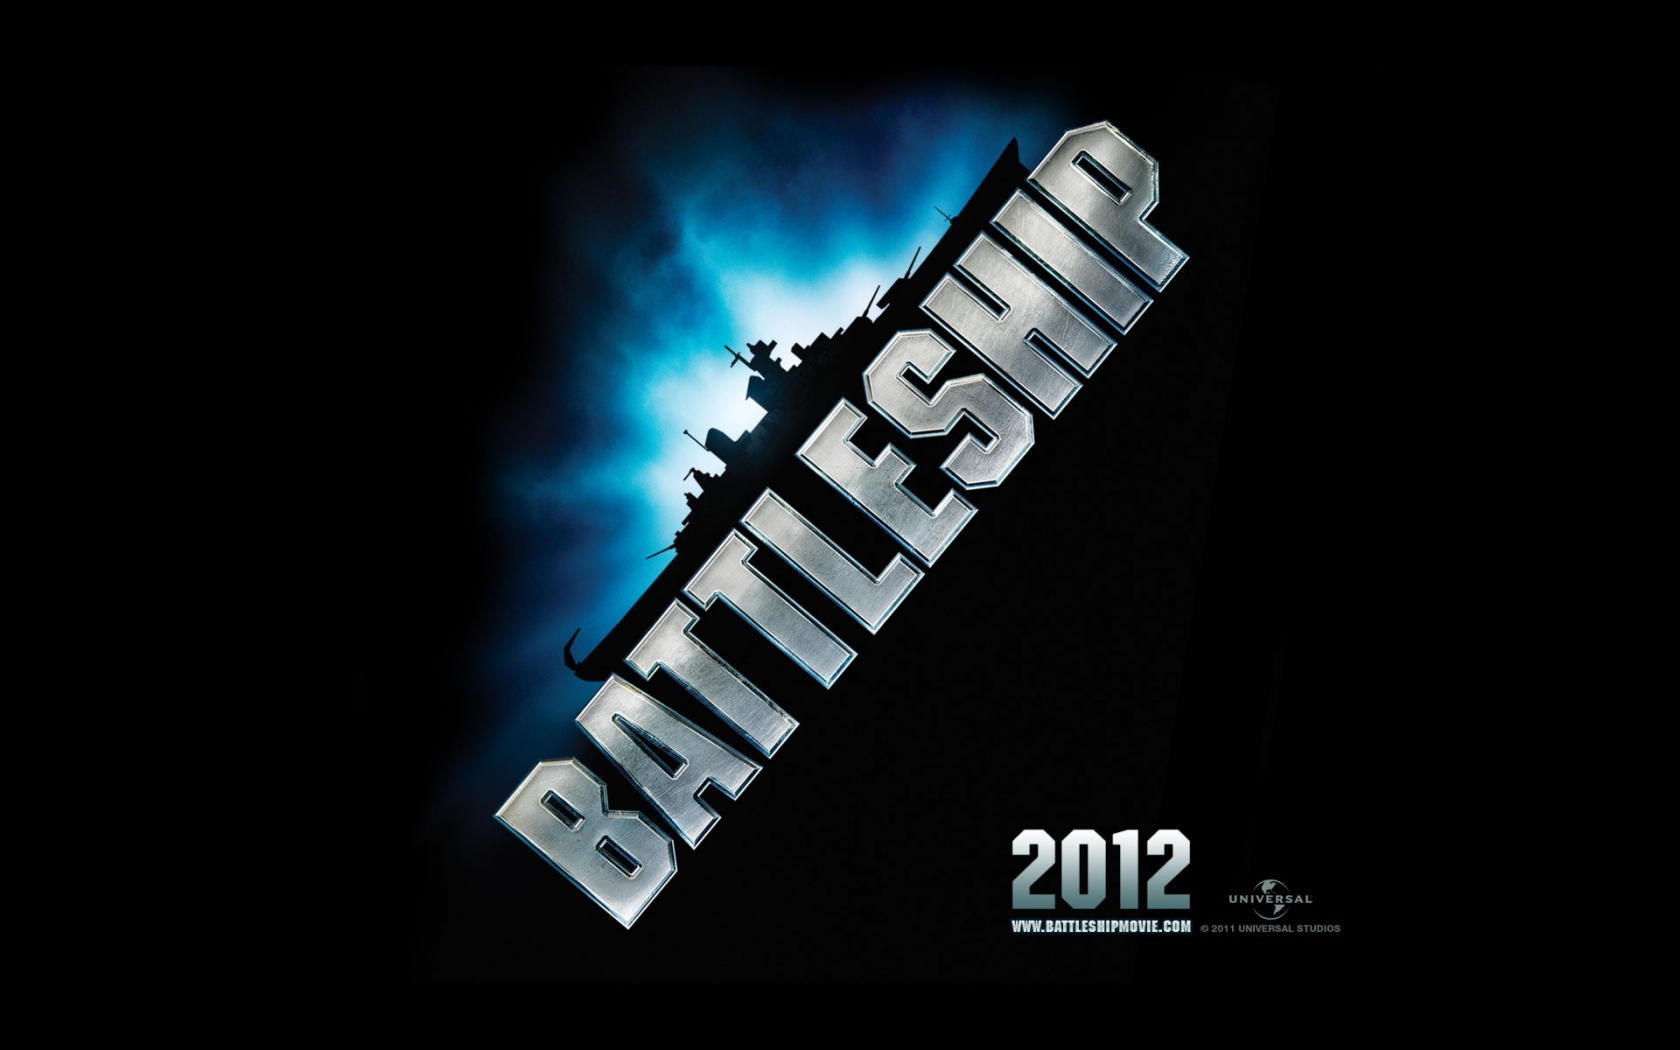 Battleship Movie for 1680 x 1050 widescreen resolution